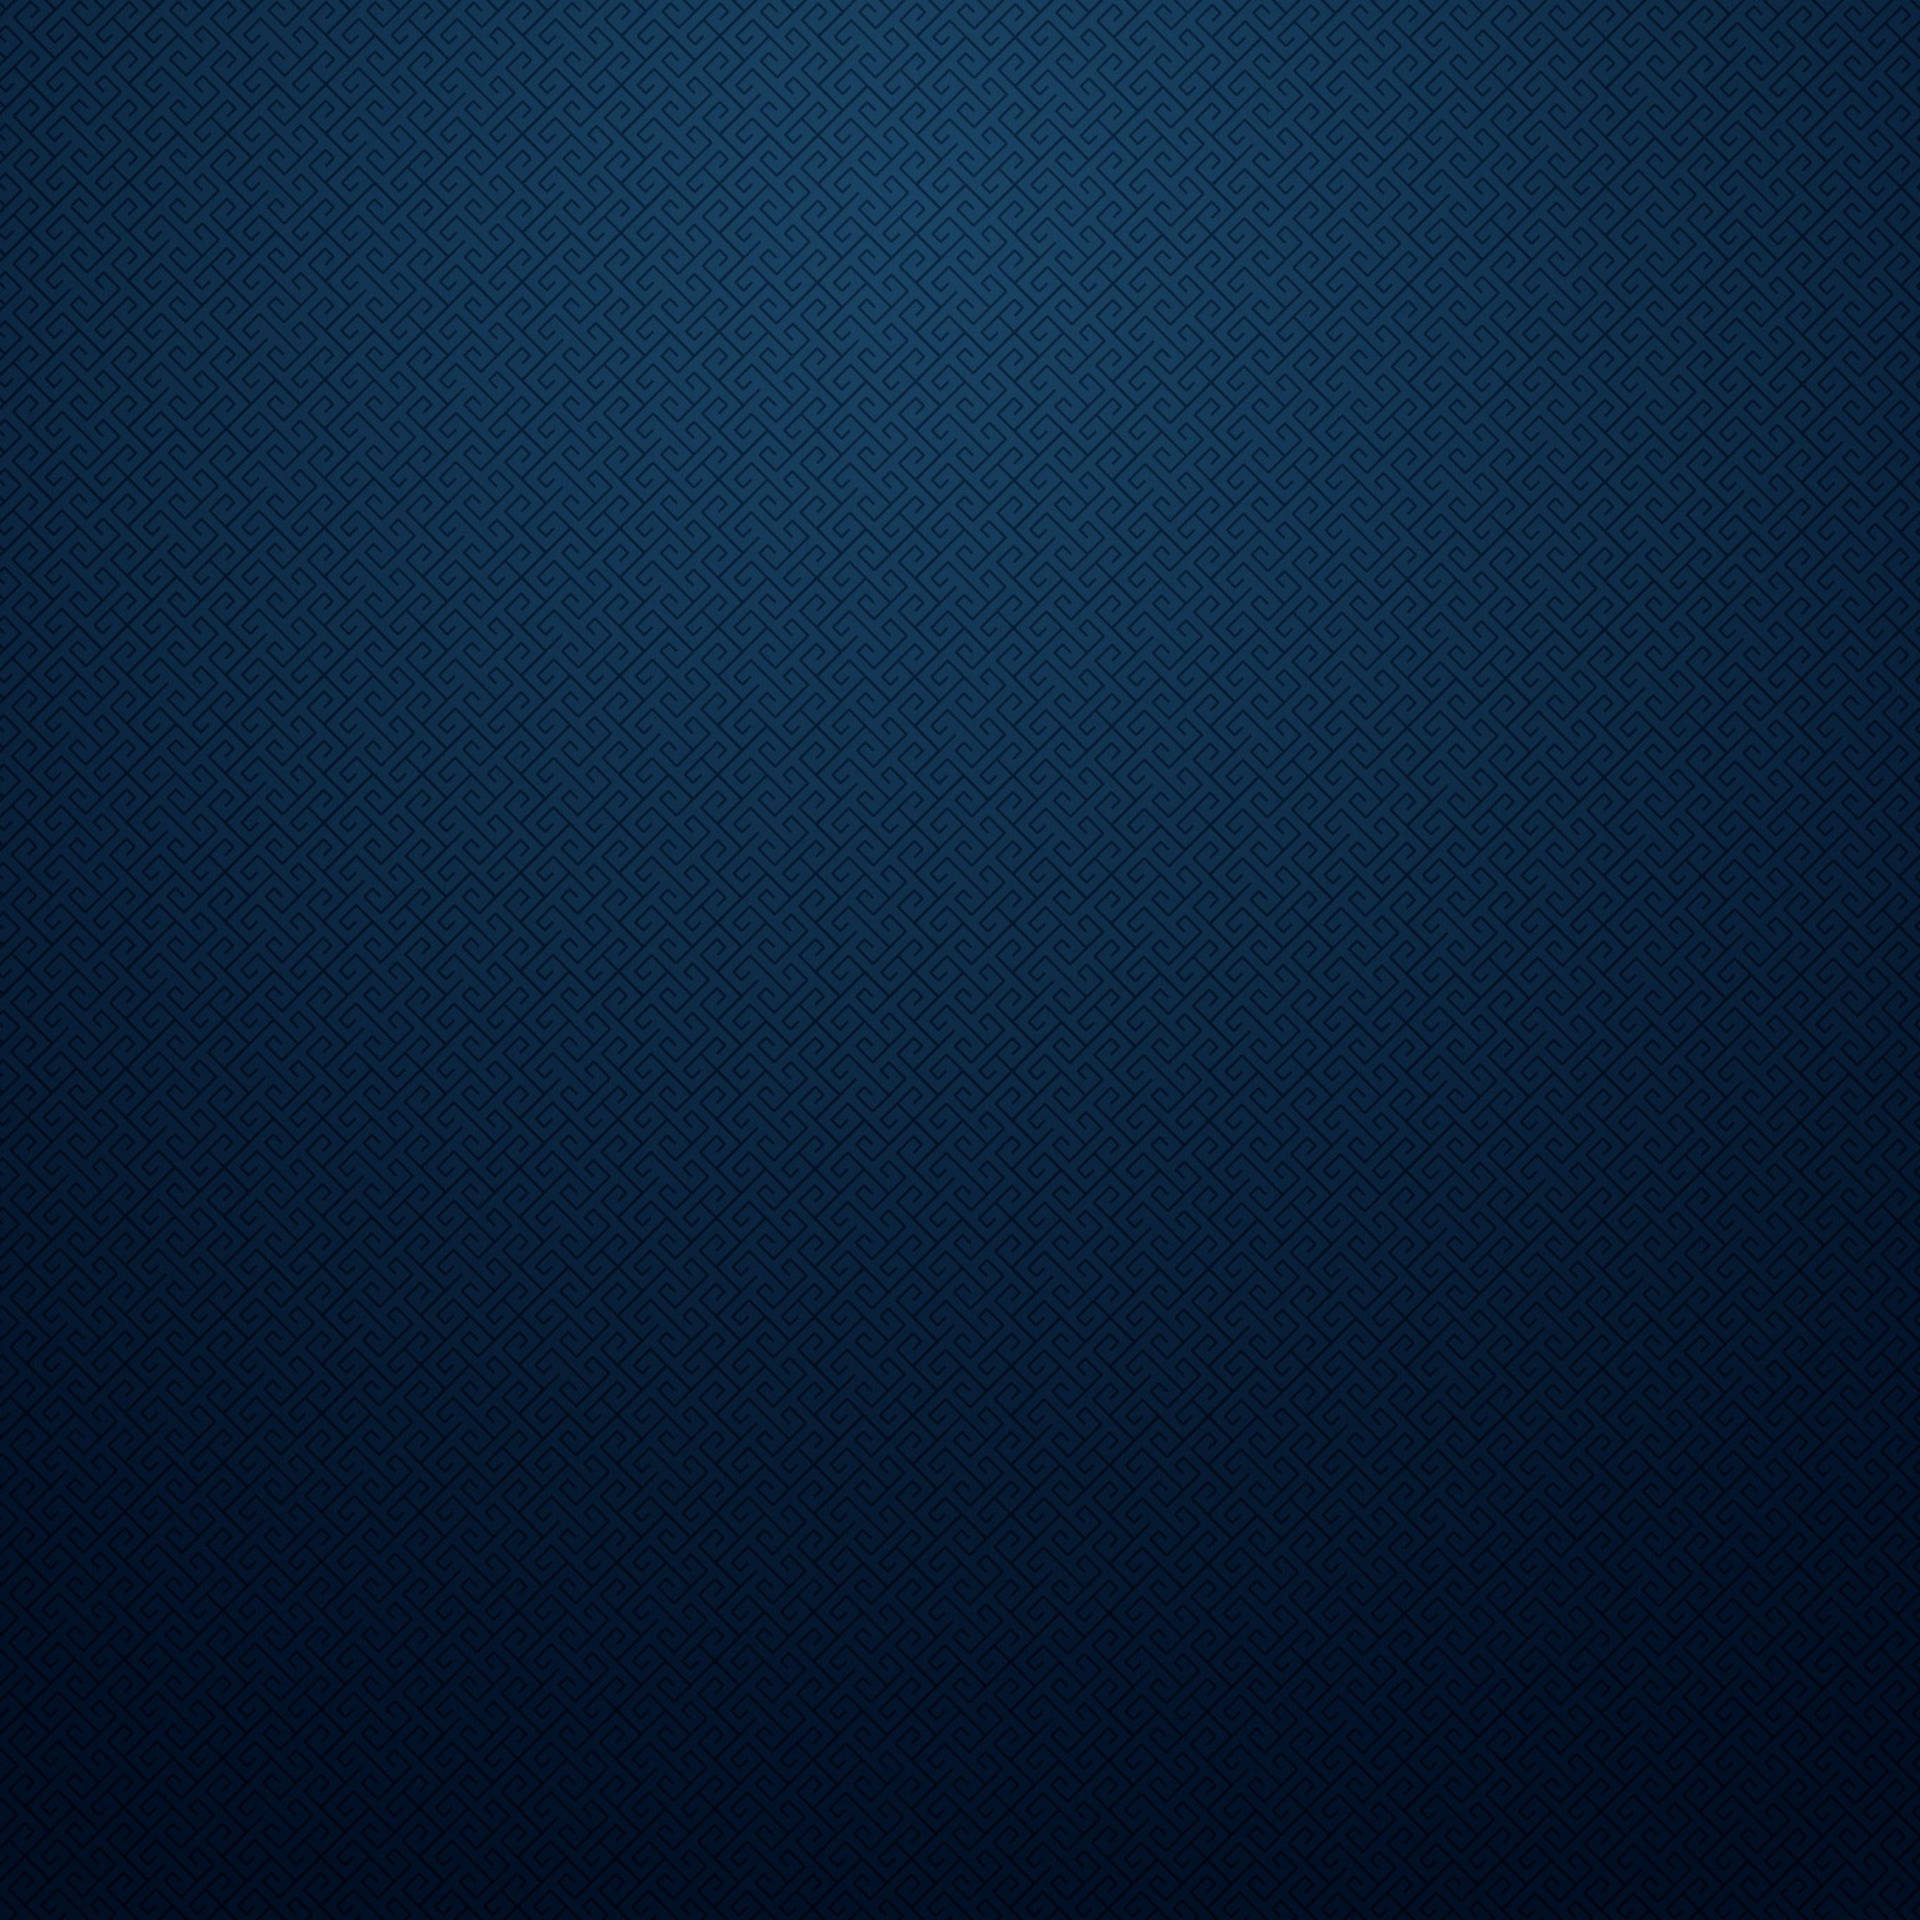 Ipad Pro Simple Blue Pattern Background